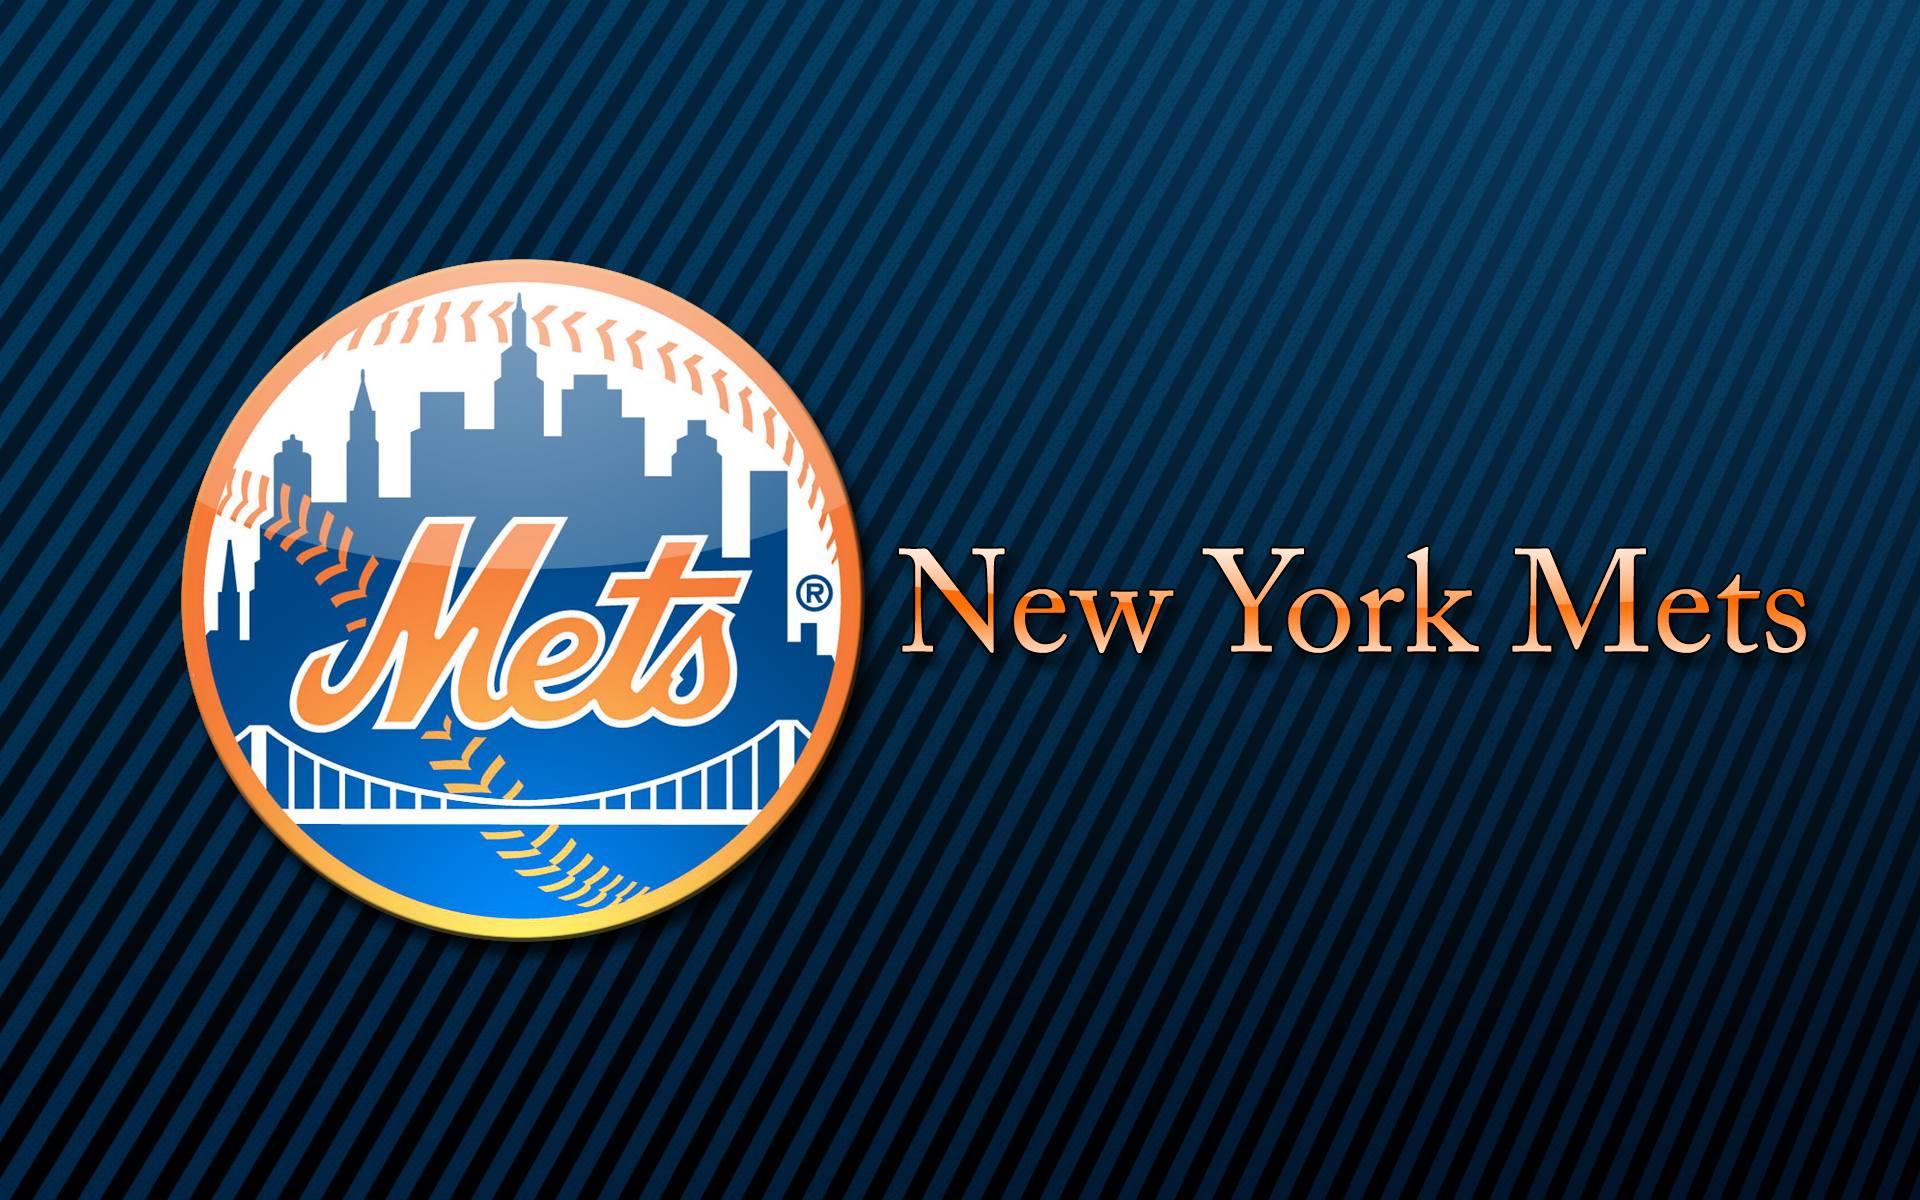 Free New York Mets desktop image New York Mets wallpapers